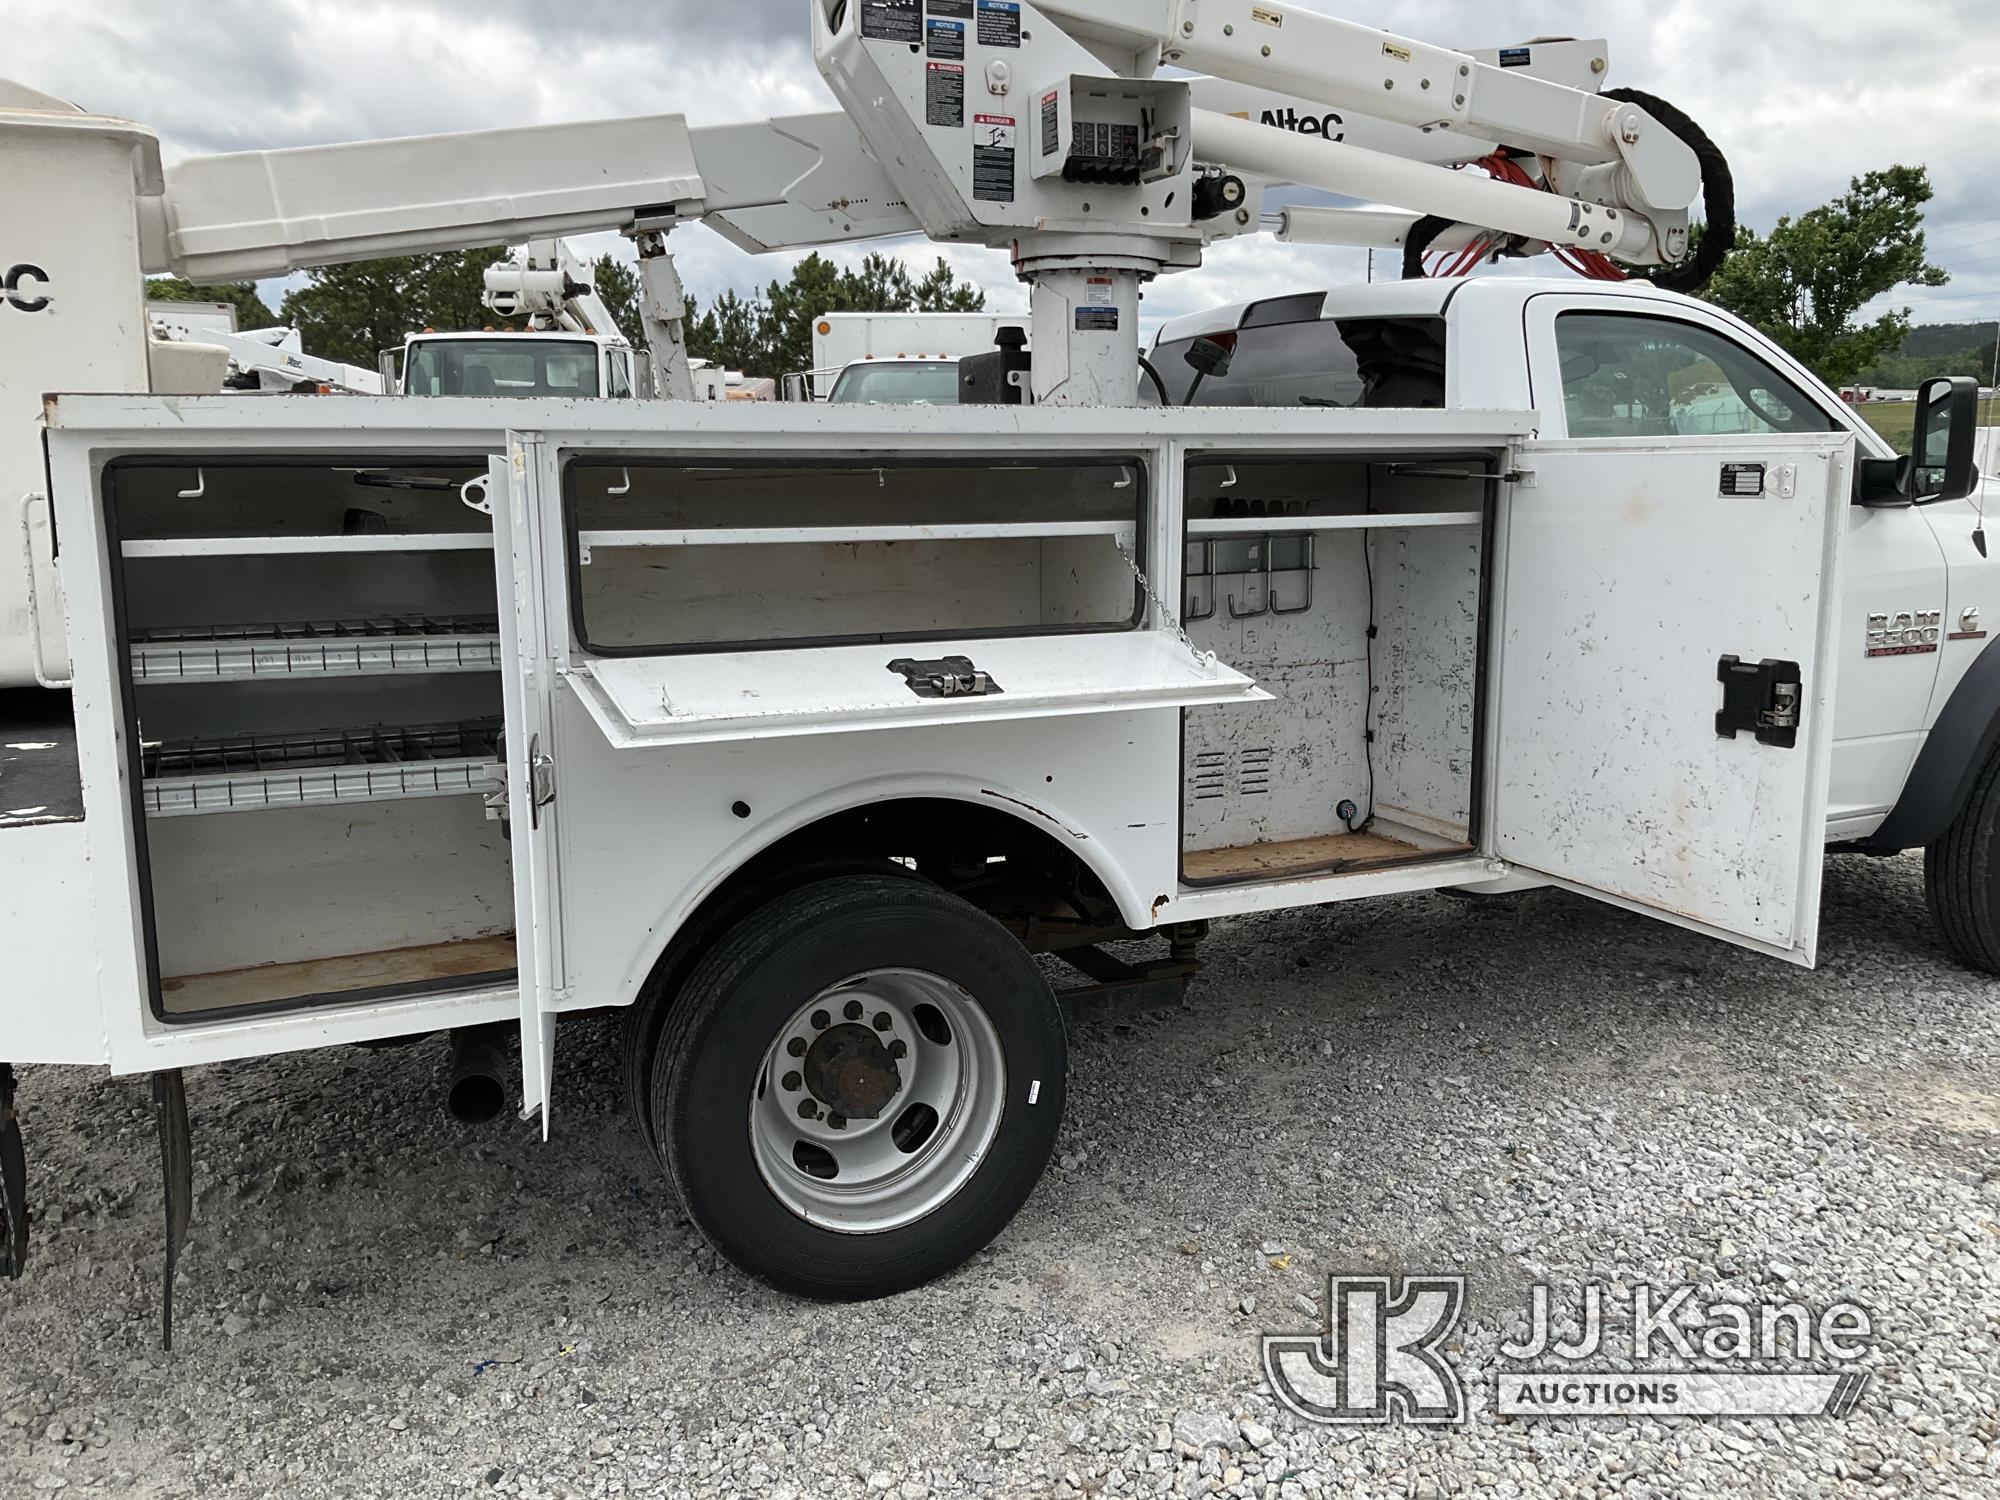 (Villa Rica, GA) Altec AT37G, Articulating & Telescopic Bucket Truck mounted behind cab on 2016 RAM